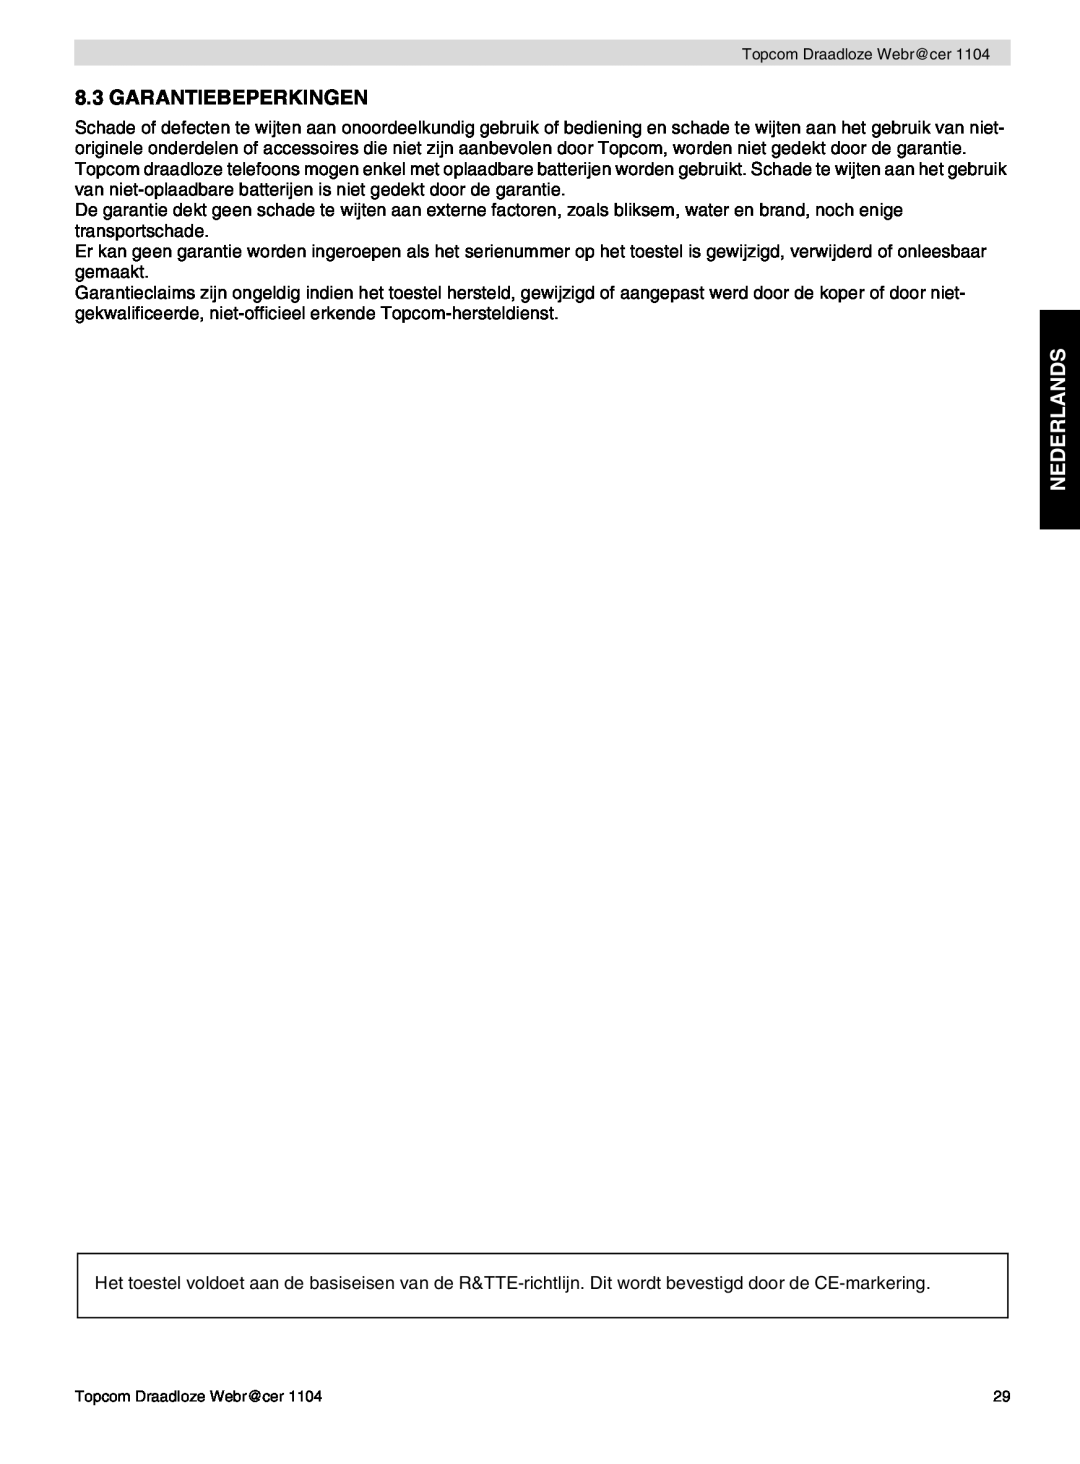 Topcom 1104 manual do utilizador Garantiebeperkingen, Nederlands 